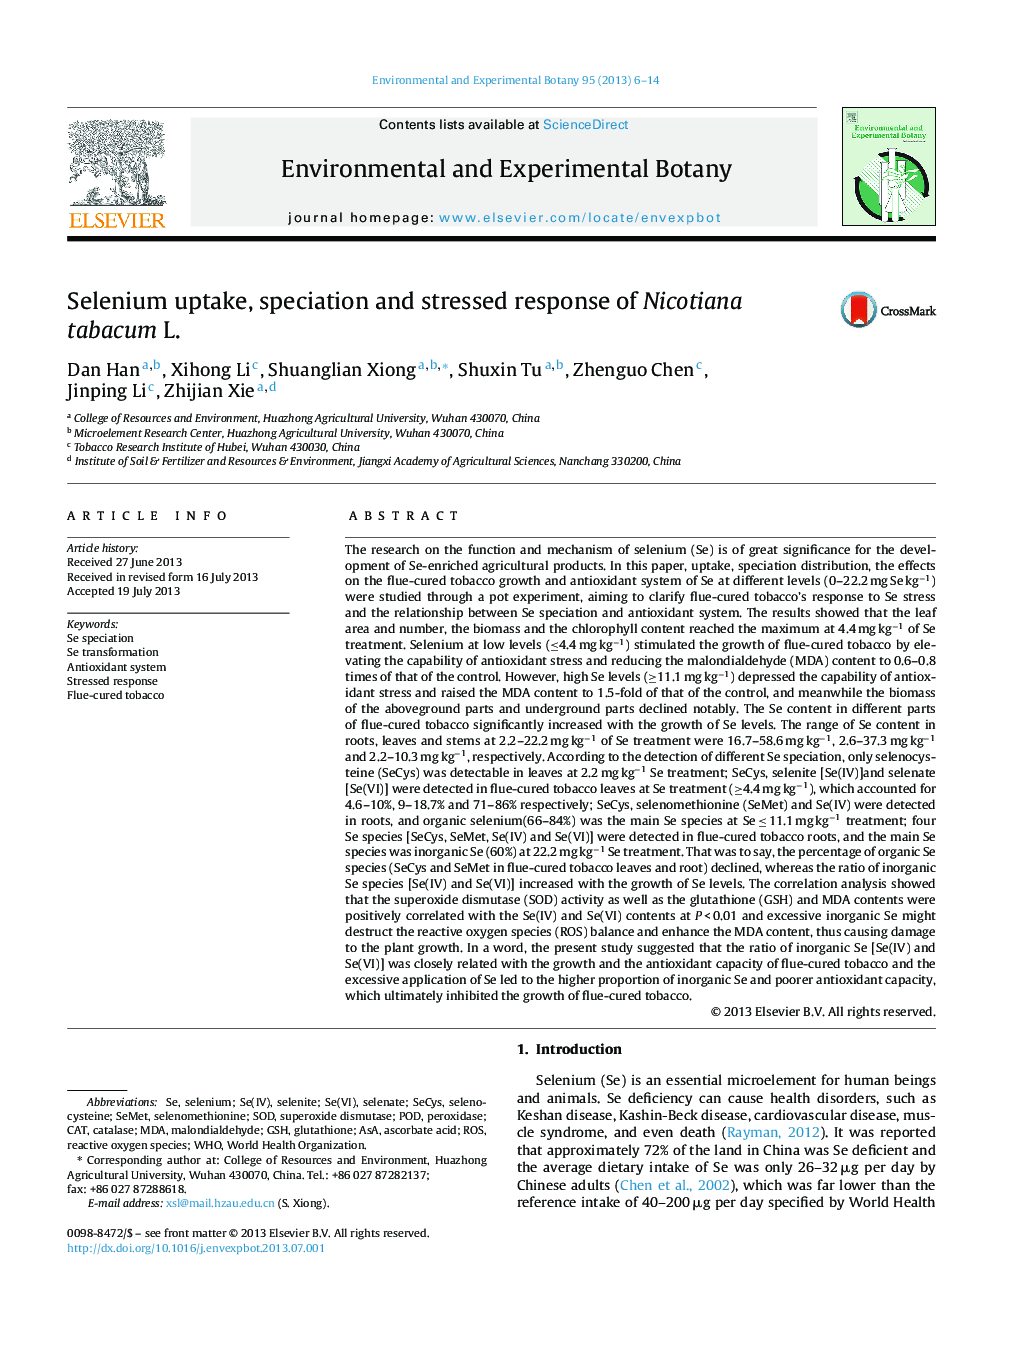 Selenium uptake, speciation and stressed response of Nicotiana tabacum L.